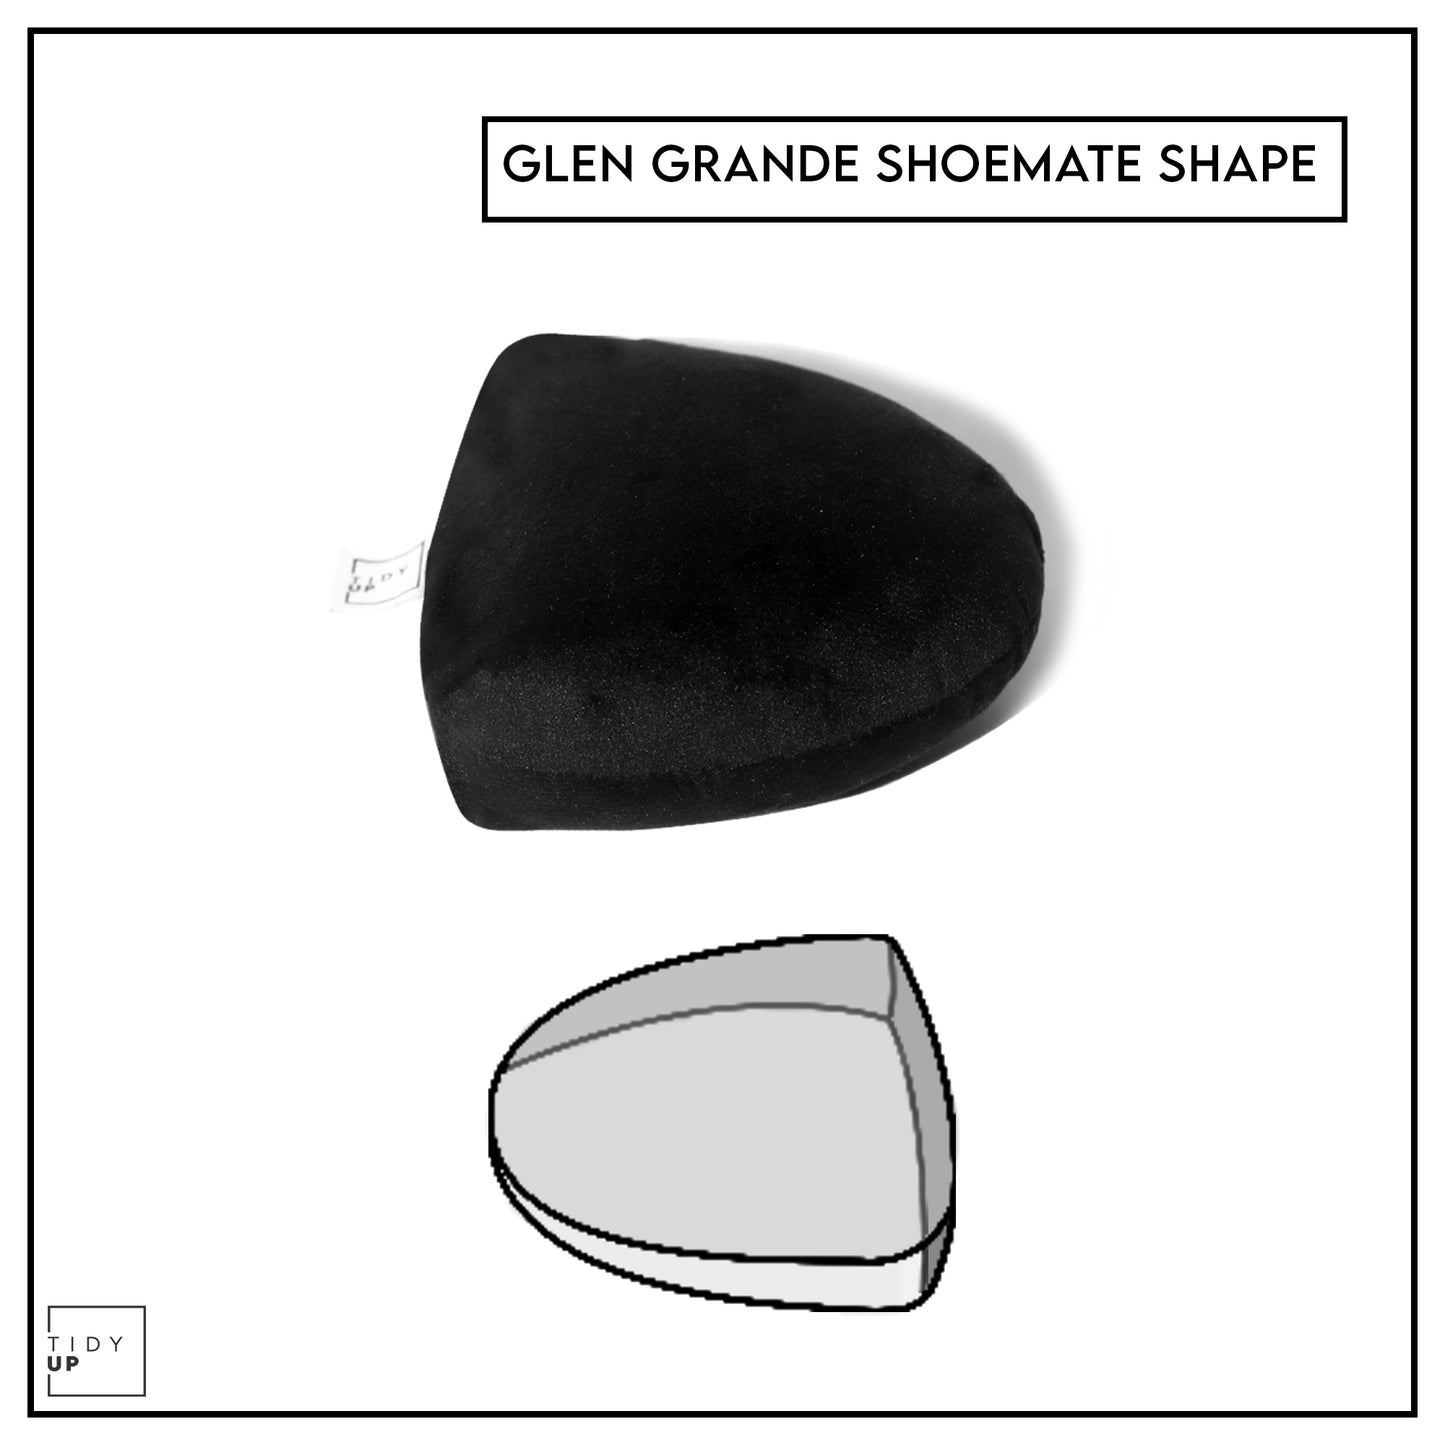 Glen Grande Shoemate